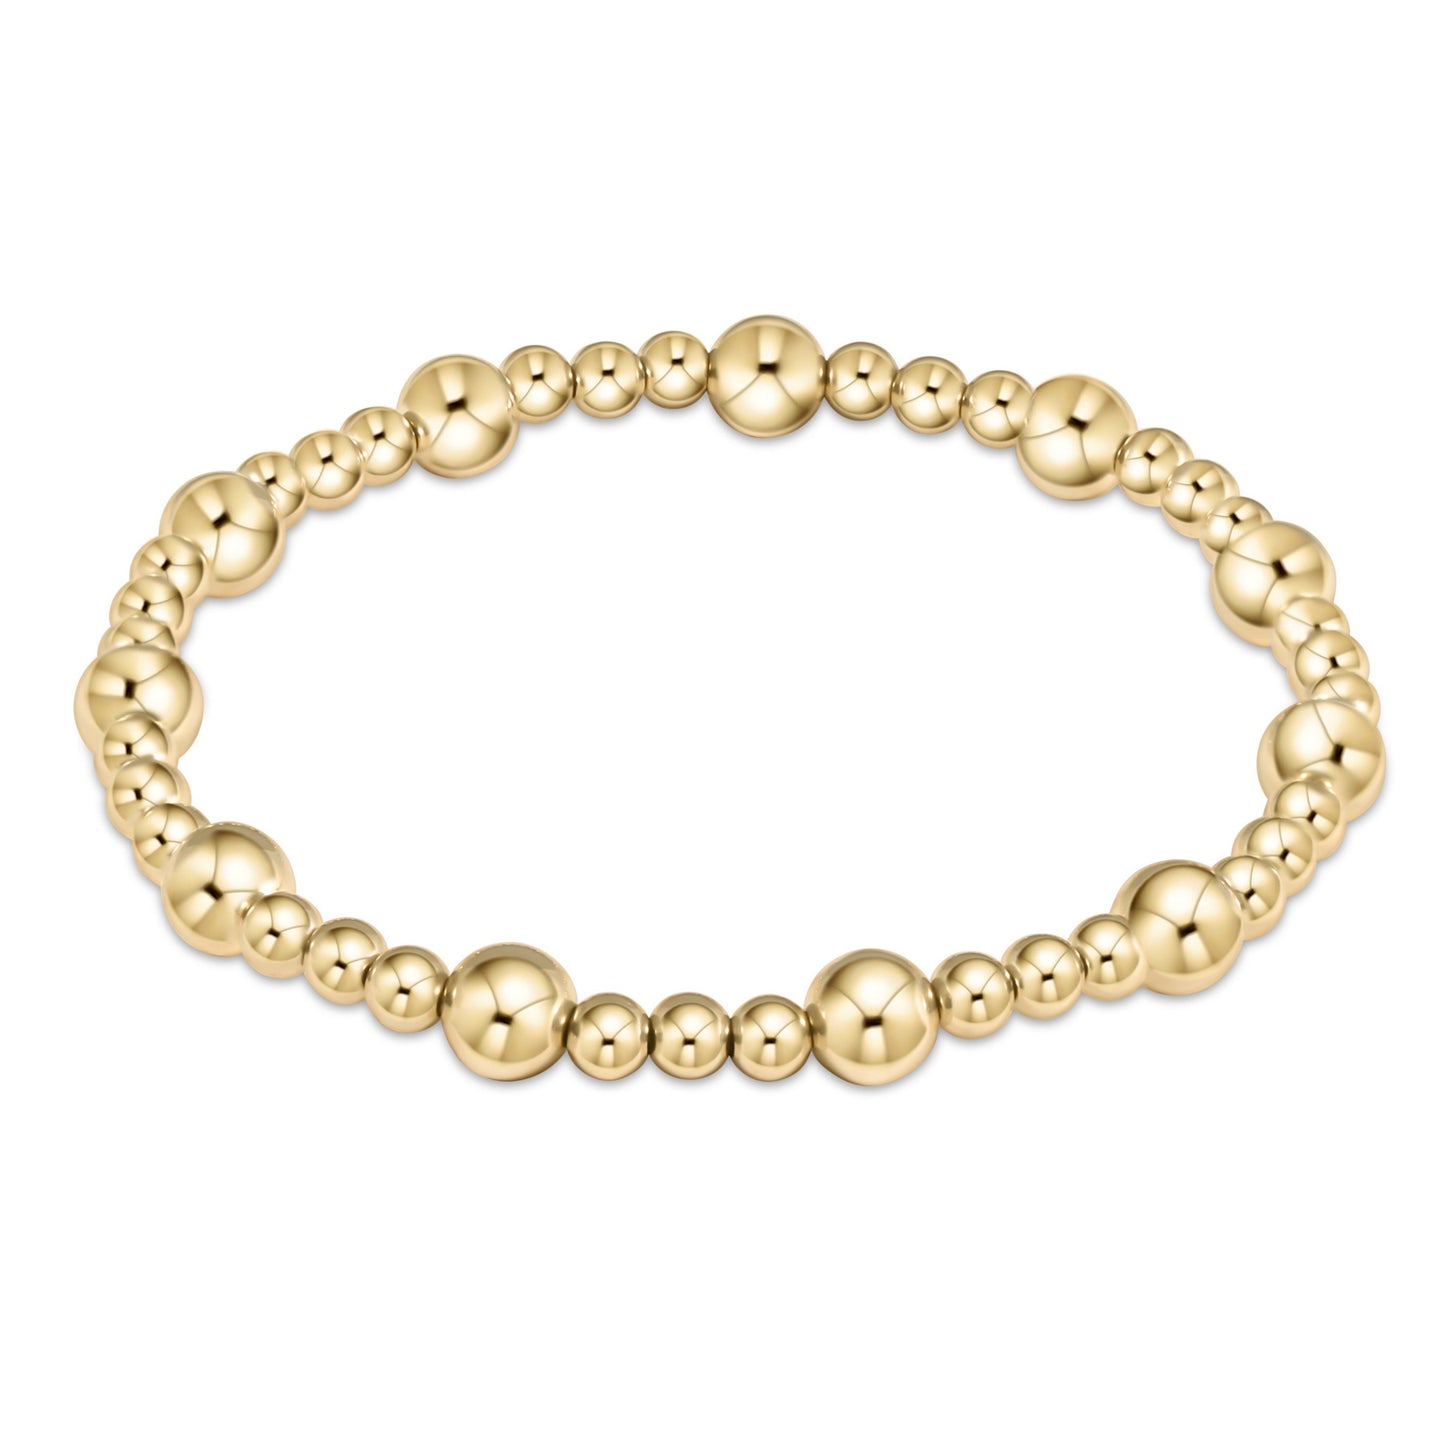 Classic Sincerity Pattern Bead Bracelet - Gold